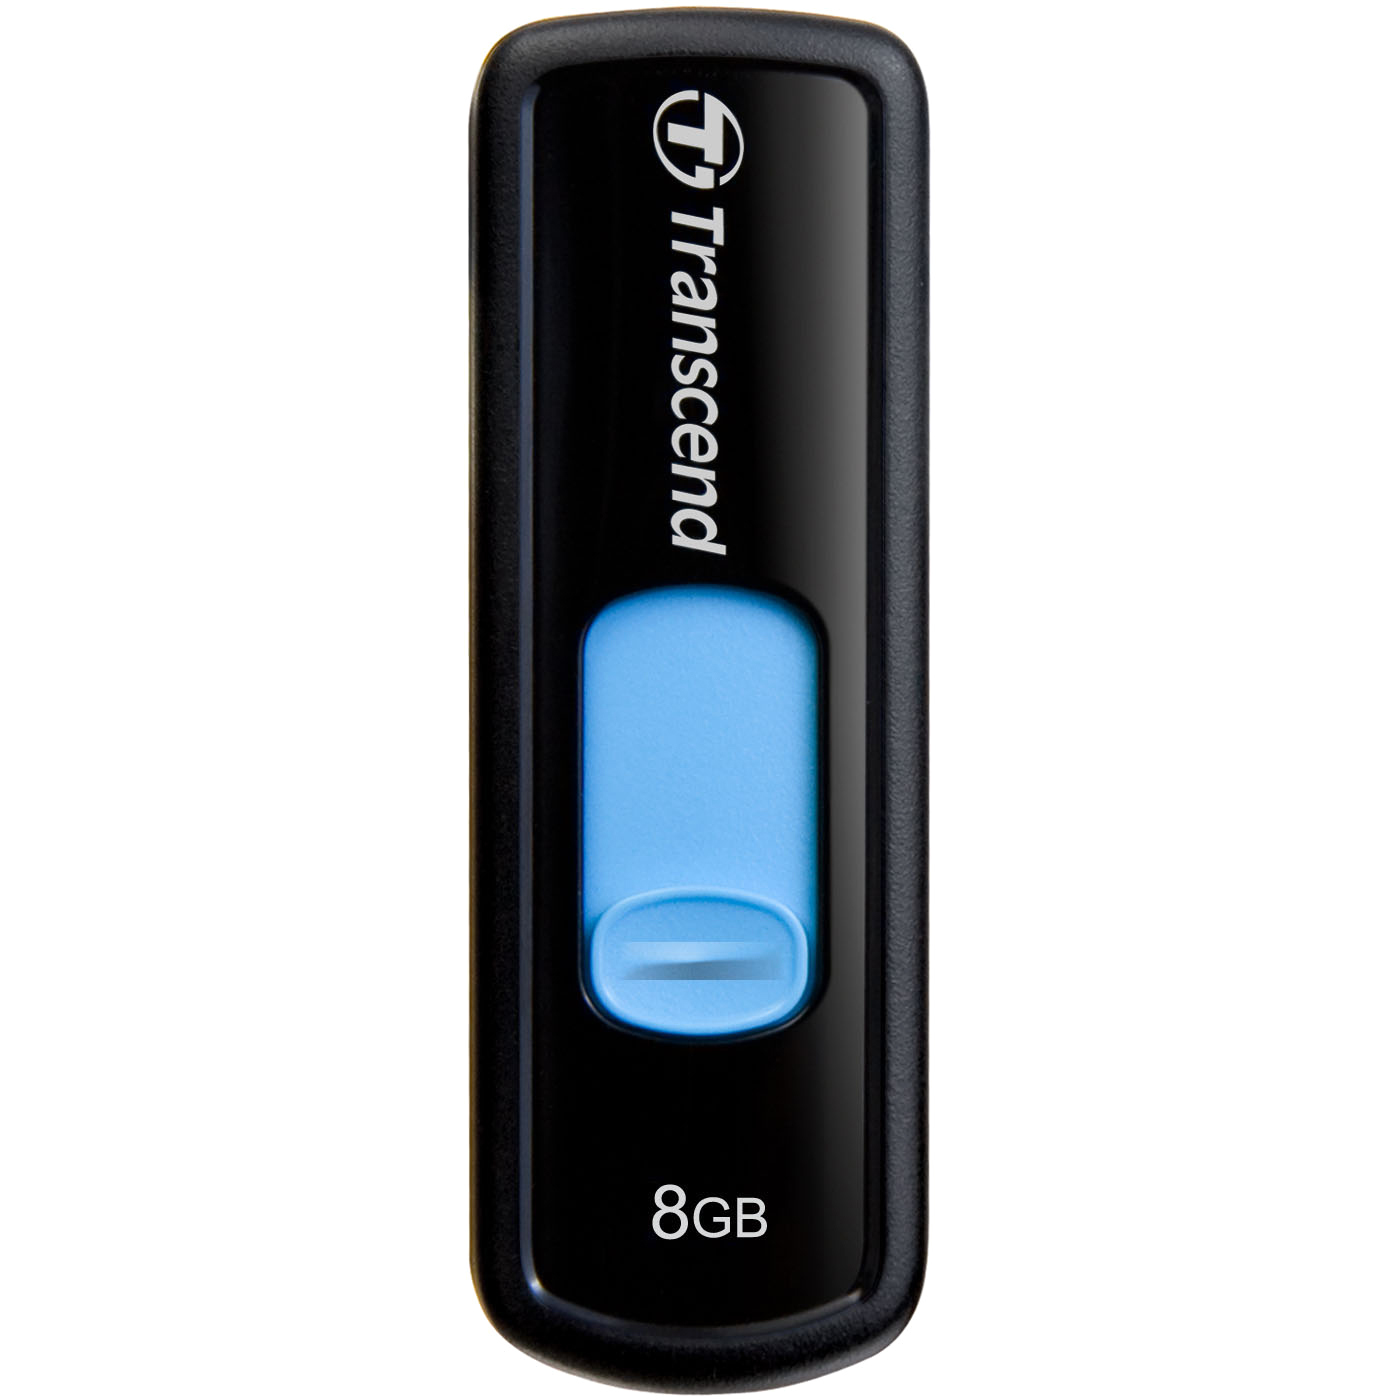 8GB JETFLASH 500 USB 2.0 DRIVE BLACK DSHIP AVAIL - image 3 of 4